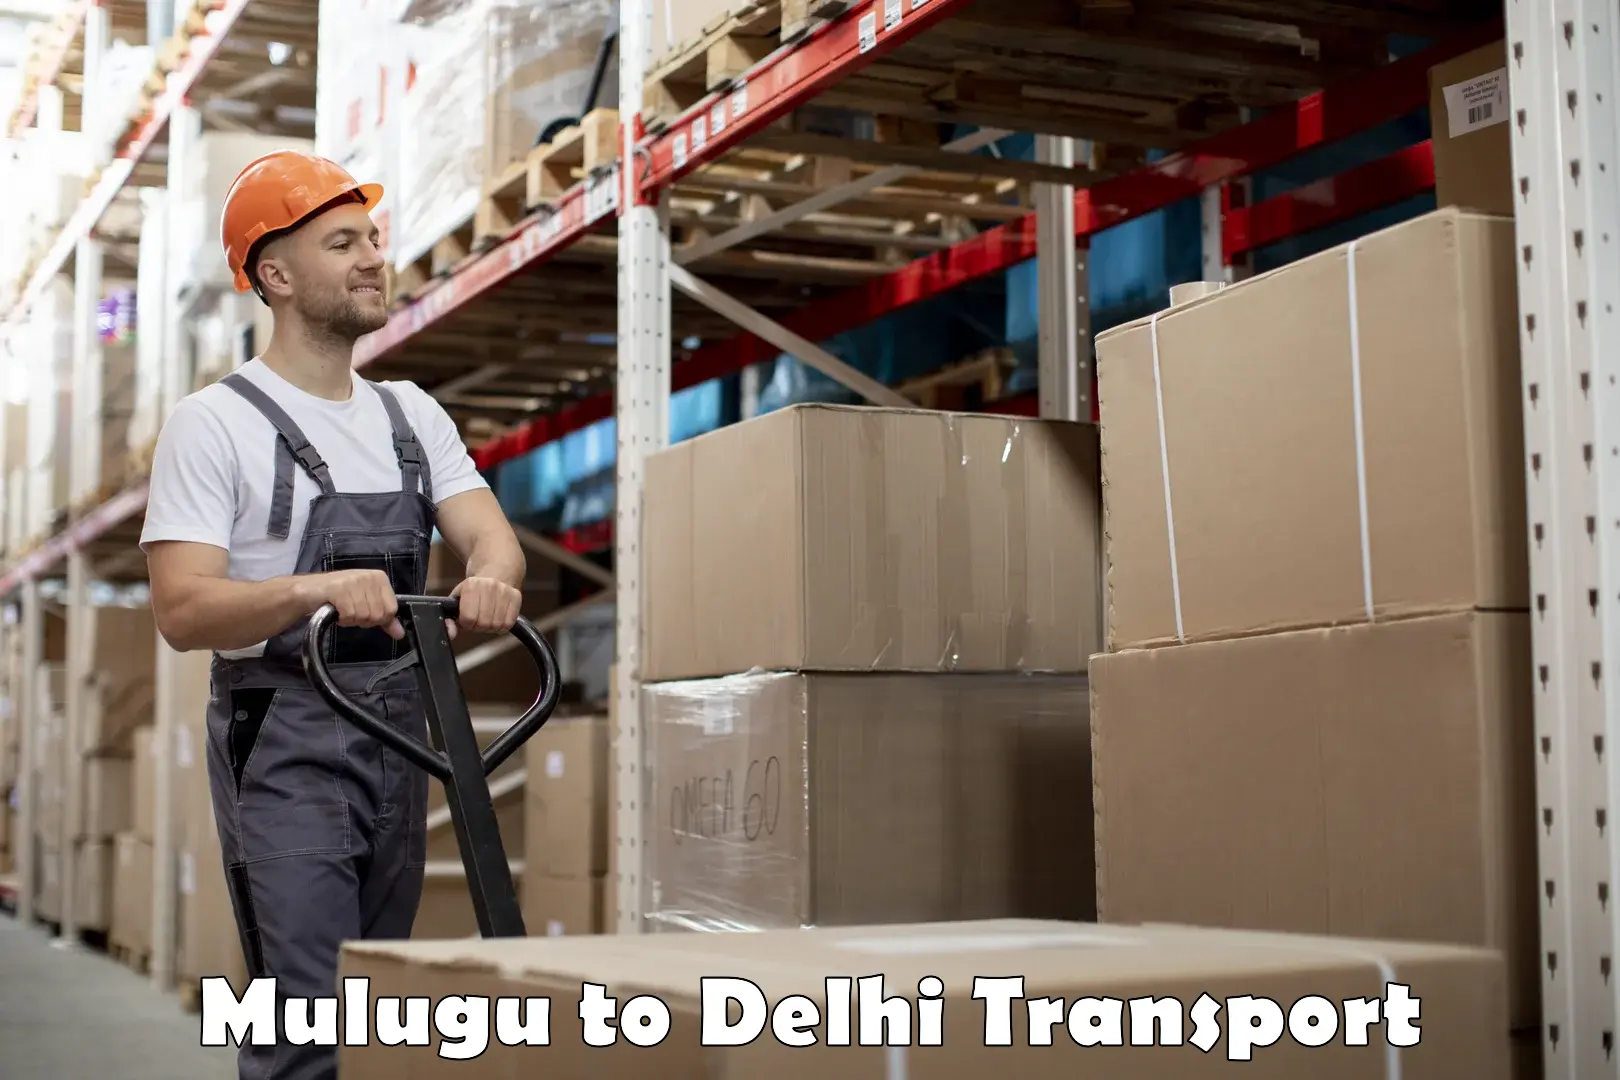 Truck transport companies in India Mulugu to Delhi